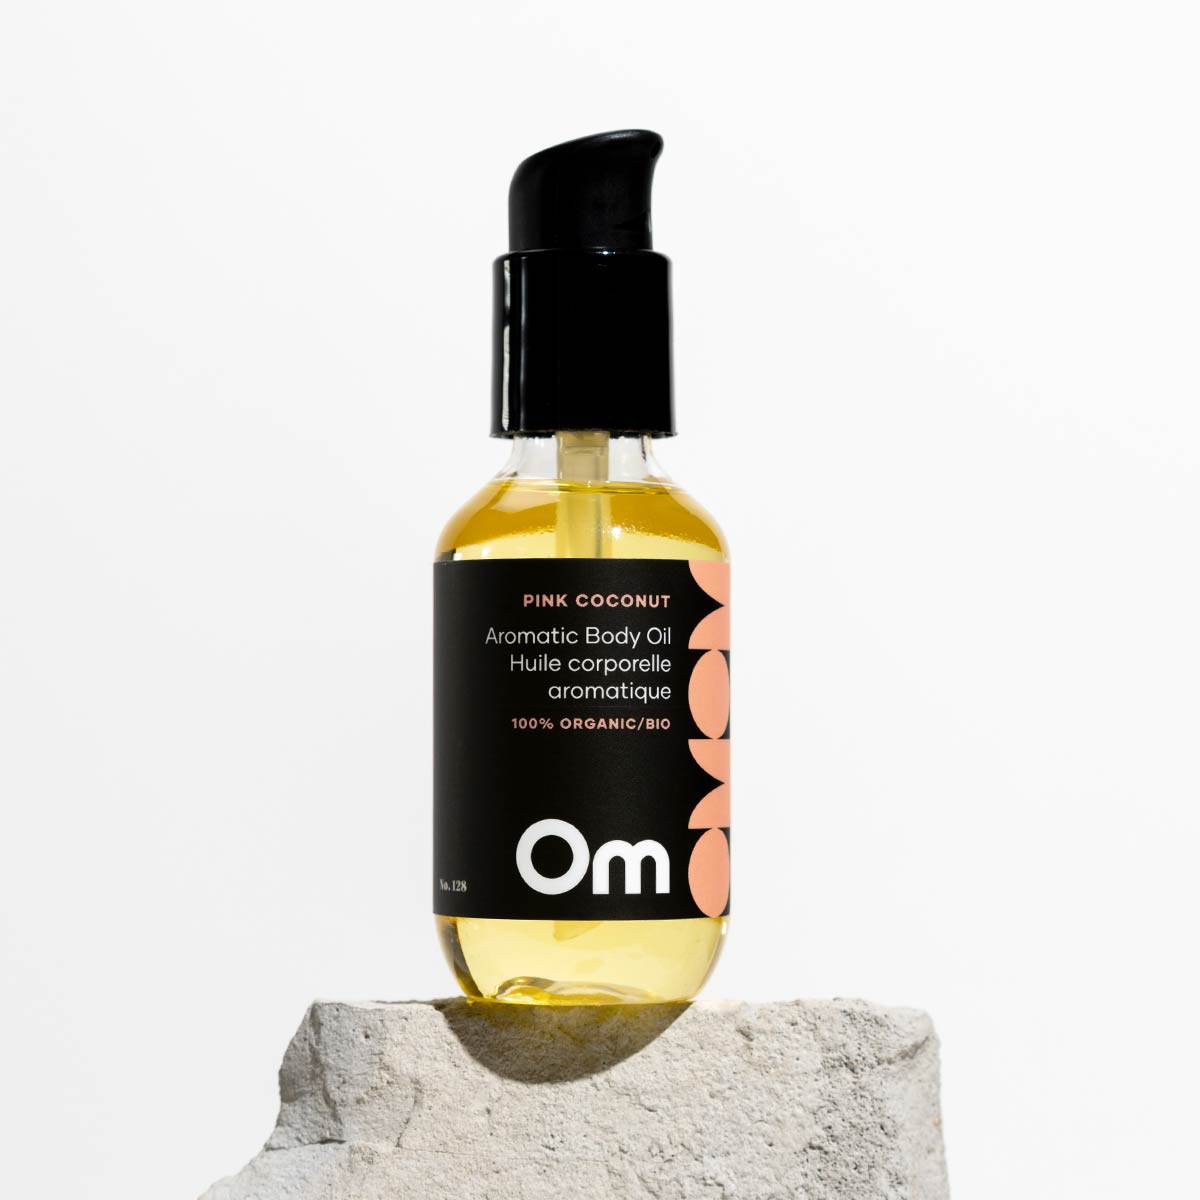 Makana - Coconut Milk 5ml Perfume Oil – Urban Poppy